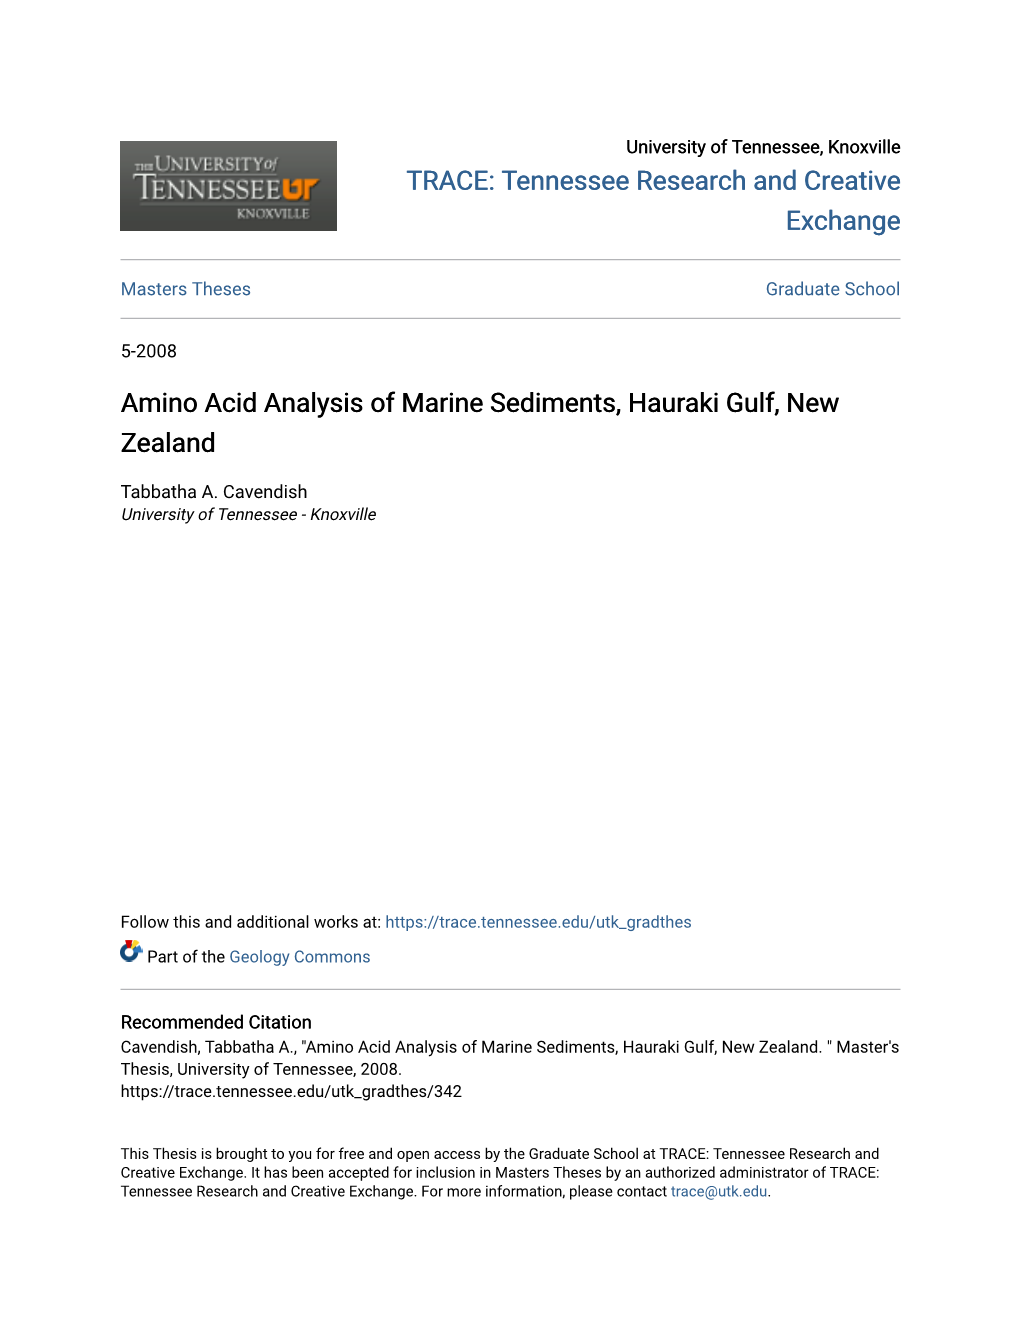 Amino Acid Analysis of Marine Sediments, Hauraki Gulf, New Zealand